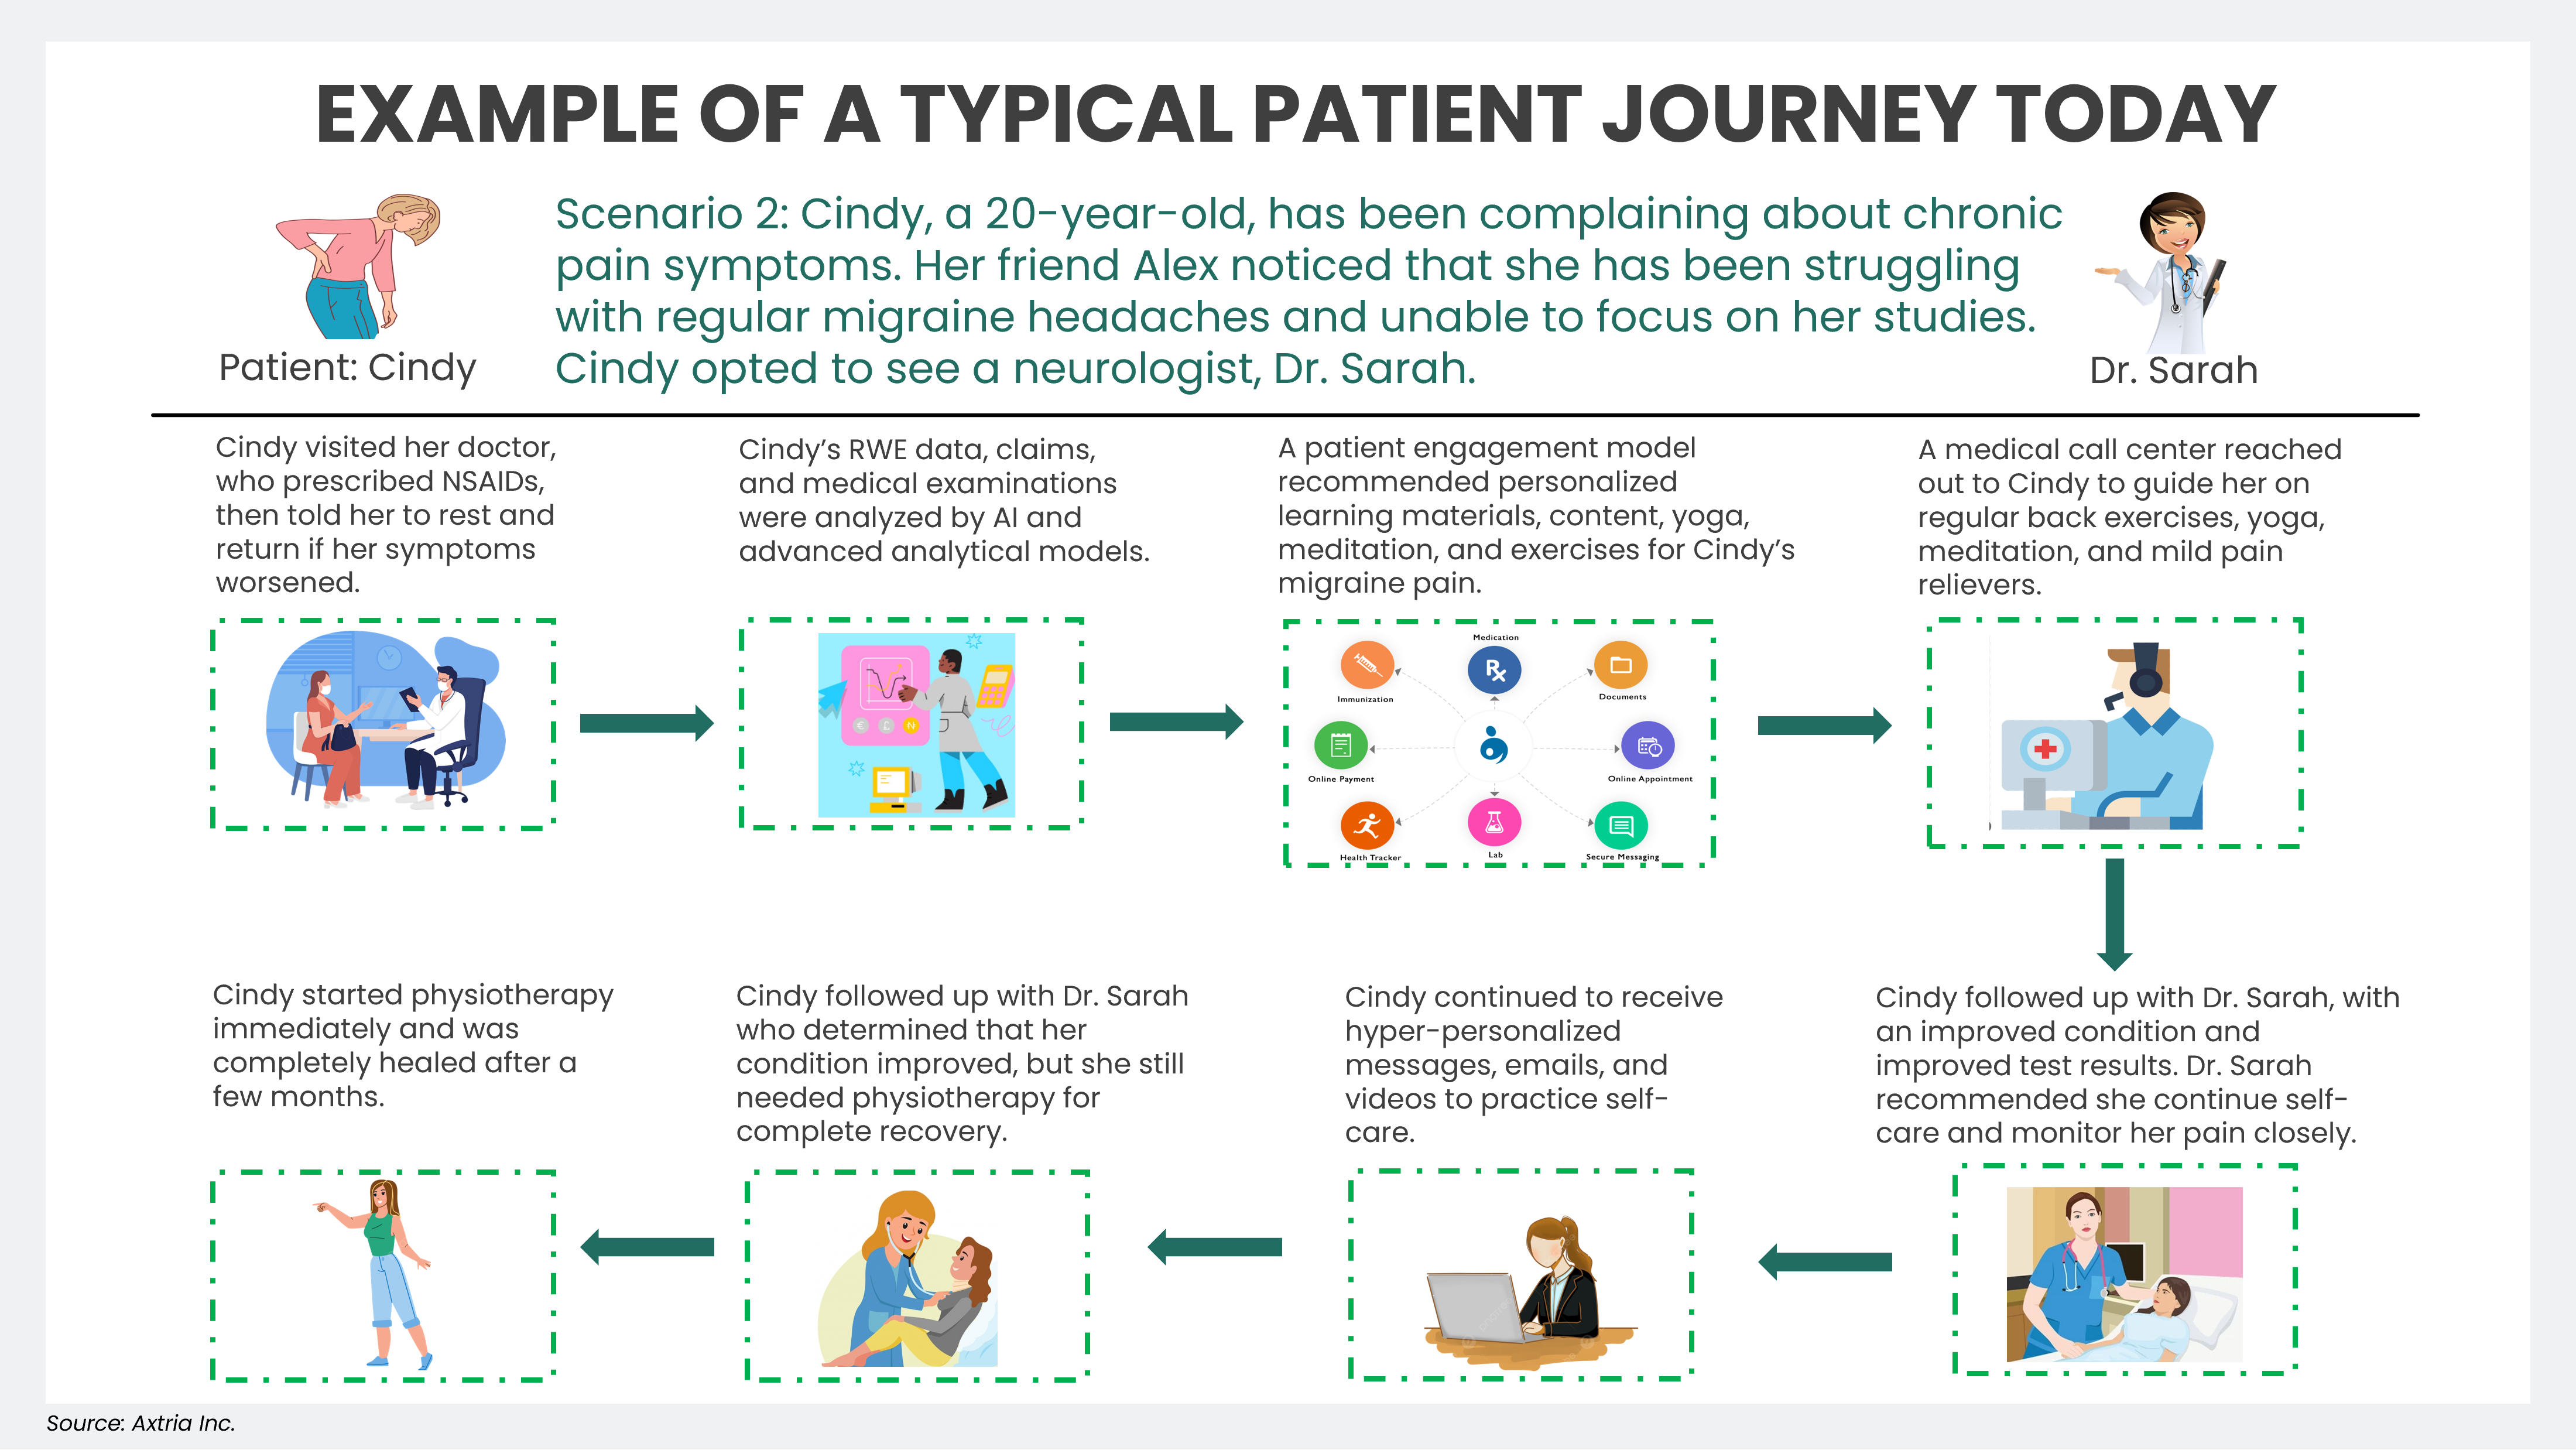 Picture2 - Typical Patient Journey